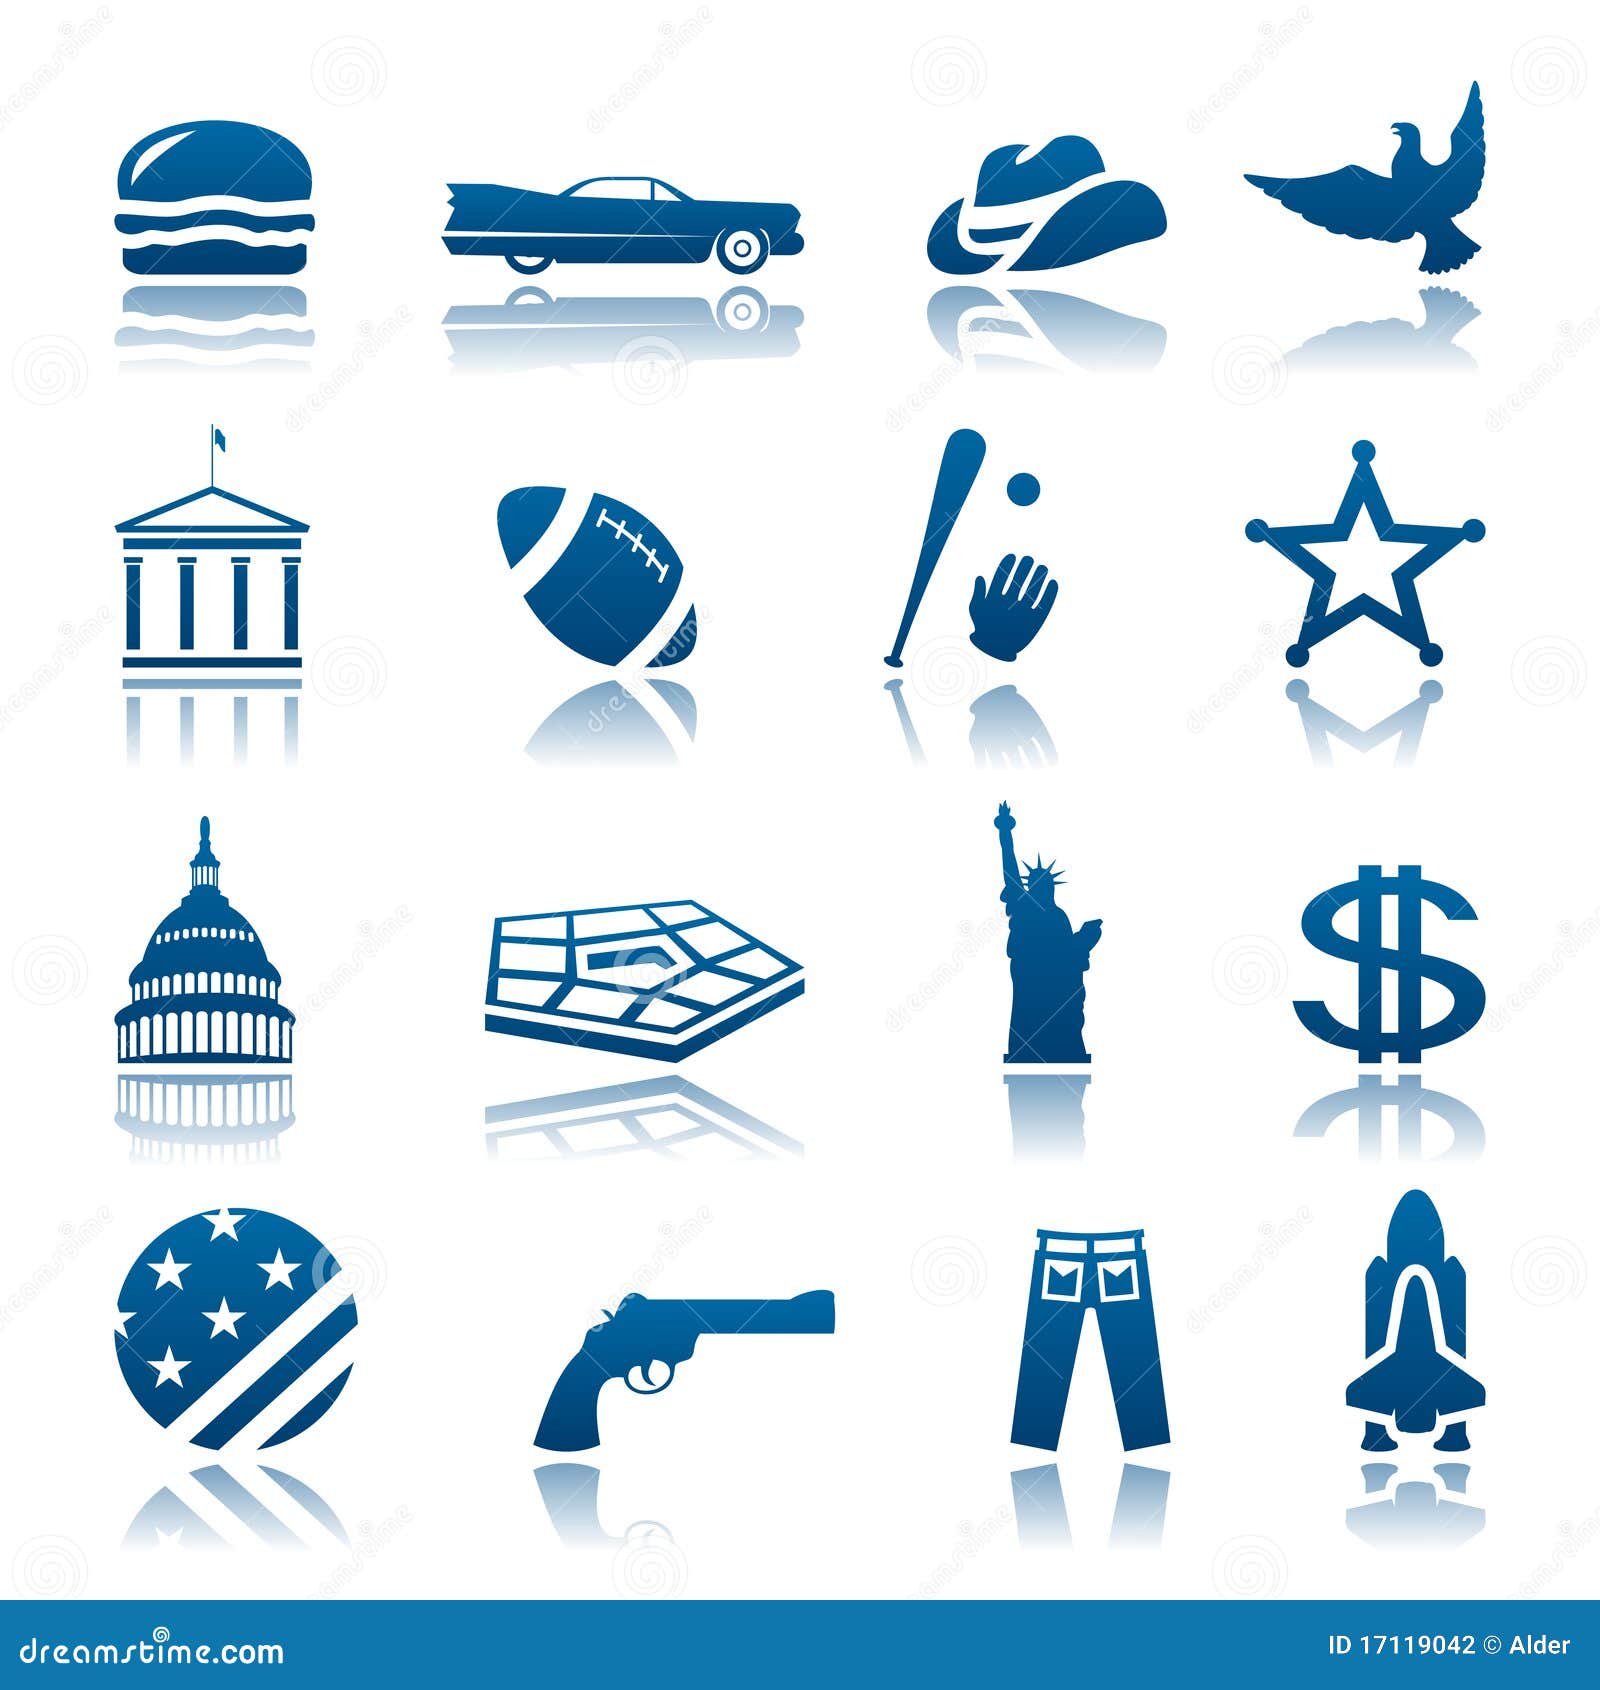 American Symbols Outline Vector Illustration | CartoonDealer.com #219971830